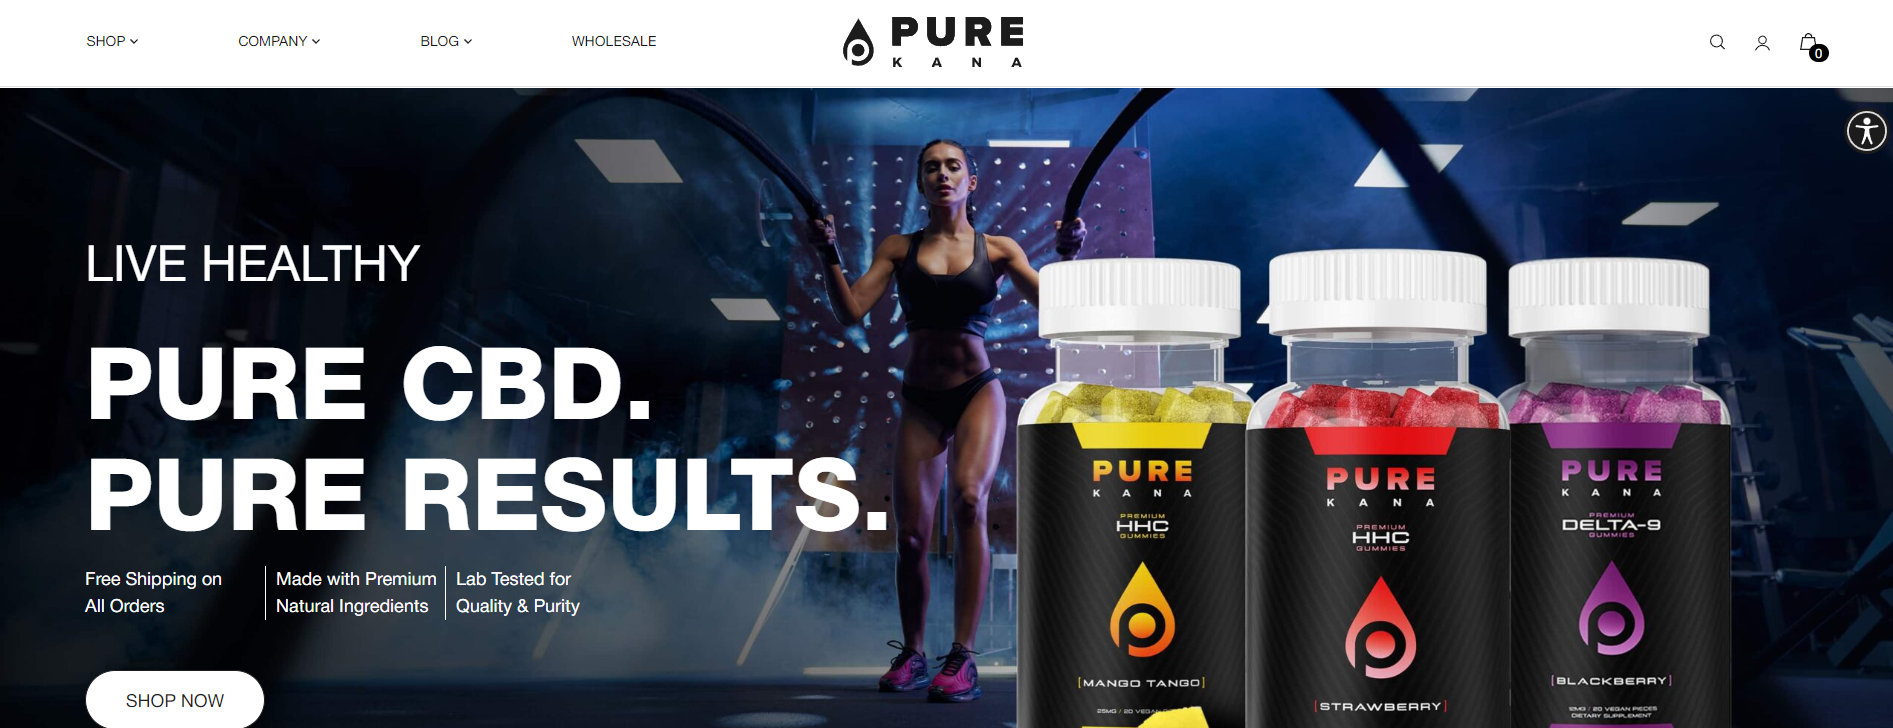 Purekana Affiliate Program Homepage Image